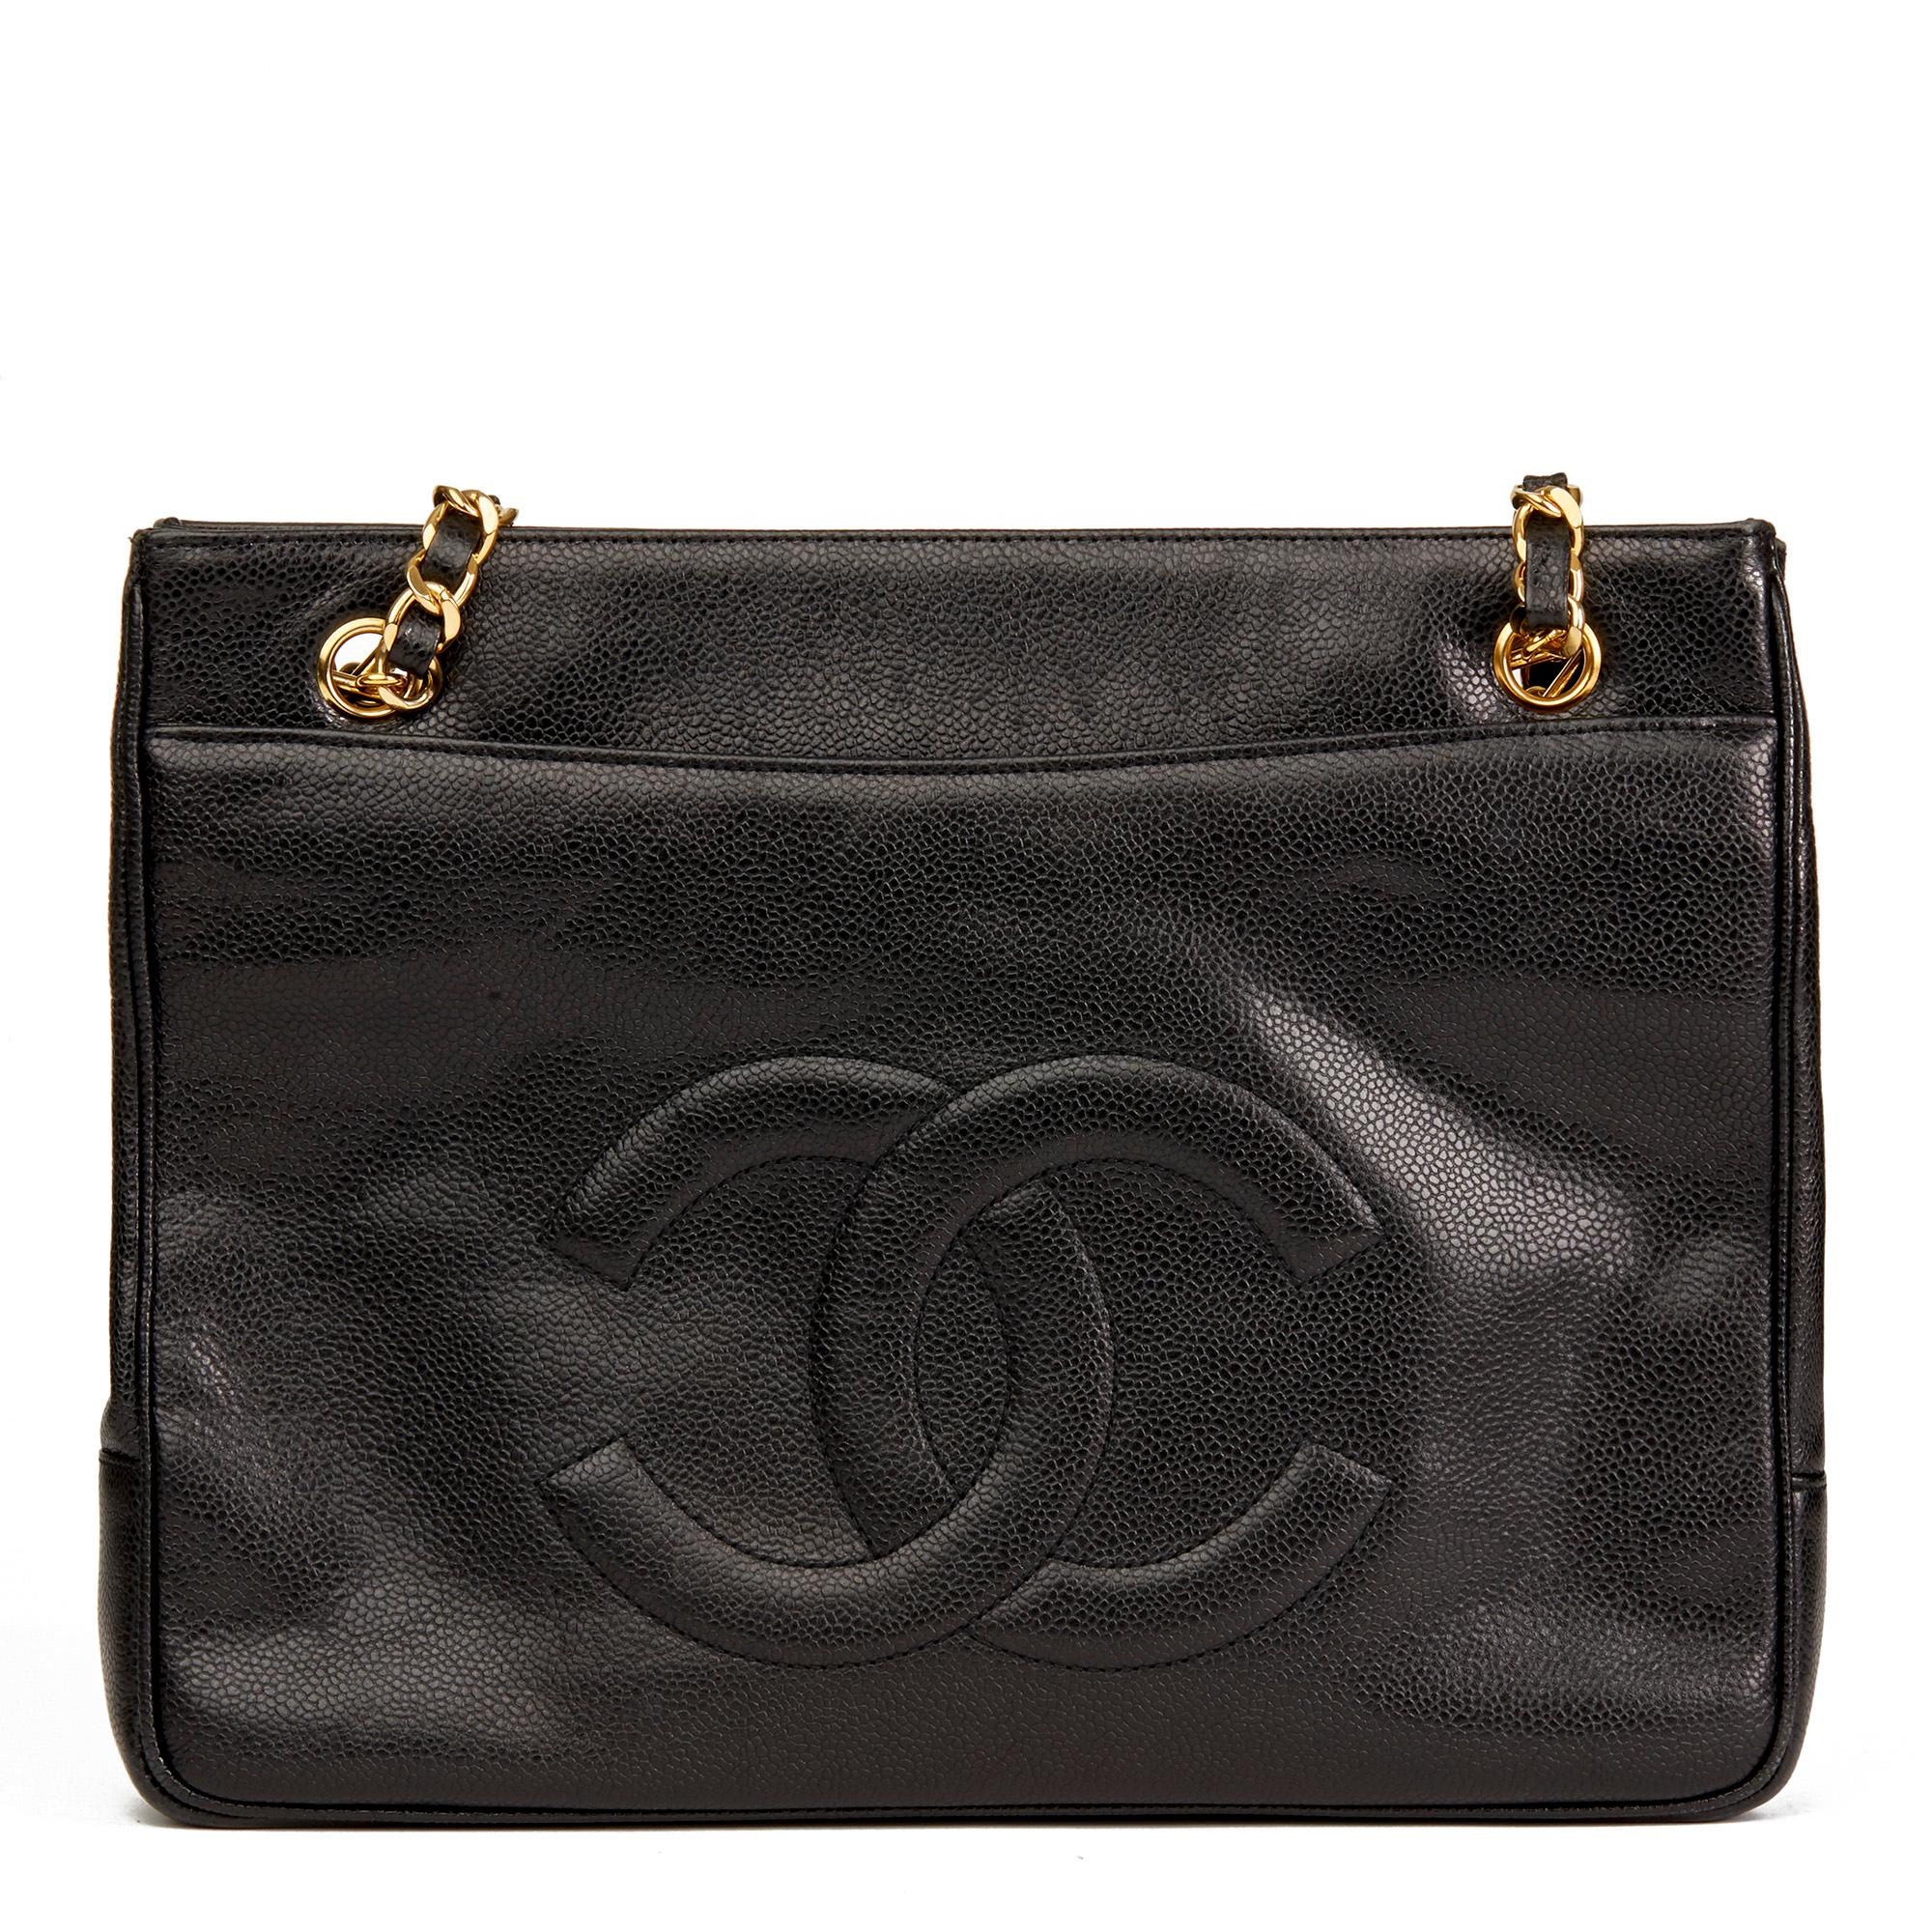 Women's 1991 Chanel Black Caviar Leather Vintage Classic Shoulder Bag